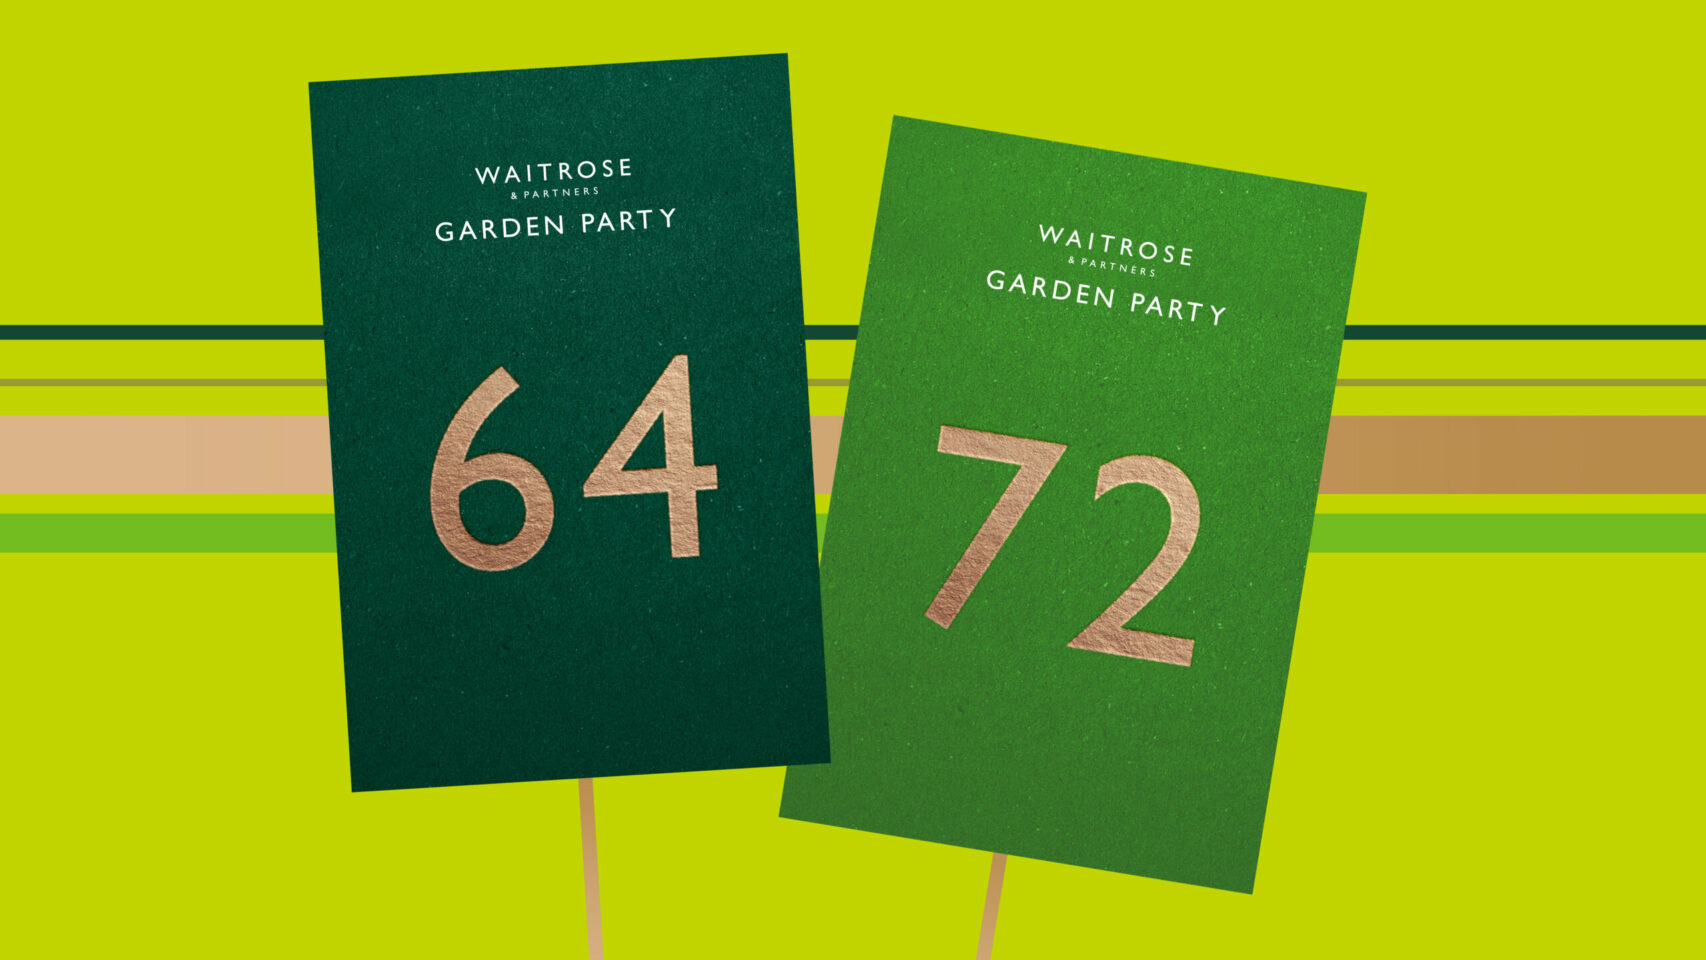 Waitrose & Partners Garden Party - GroceryAid